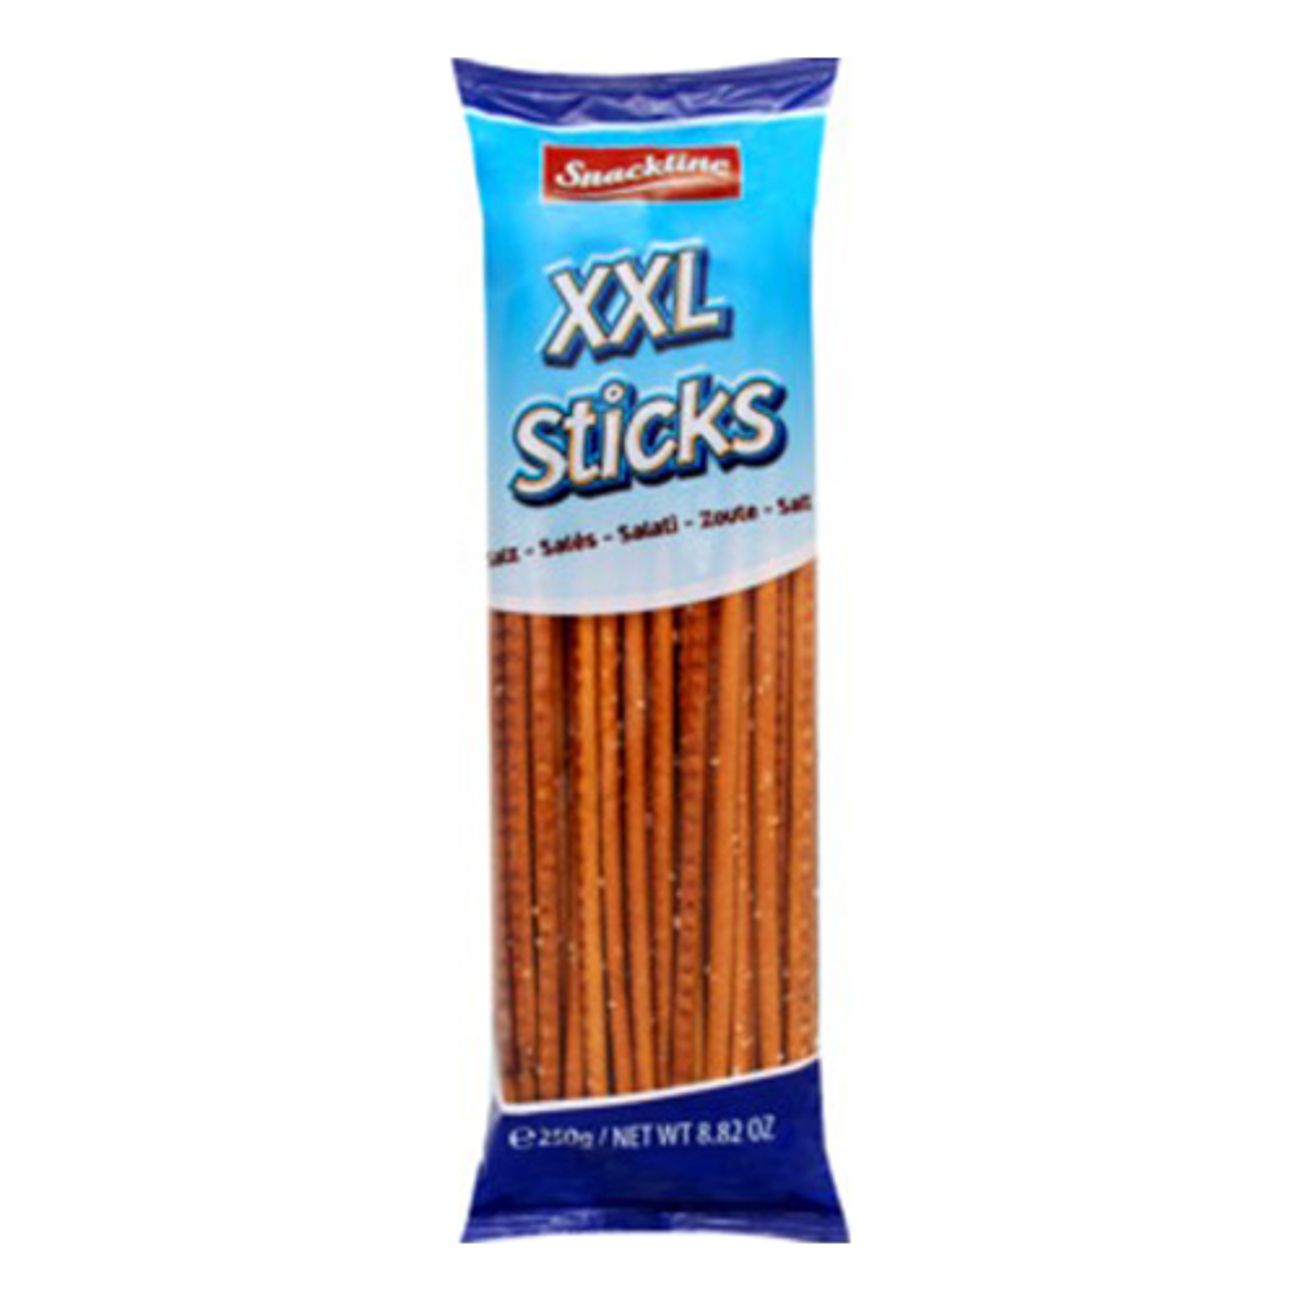 pretzel-sticks-salted-xxl-1